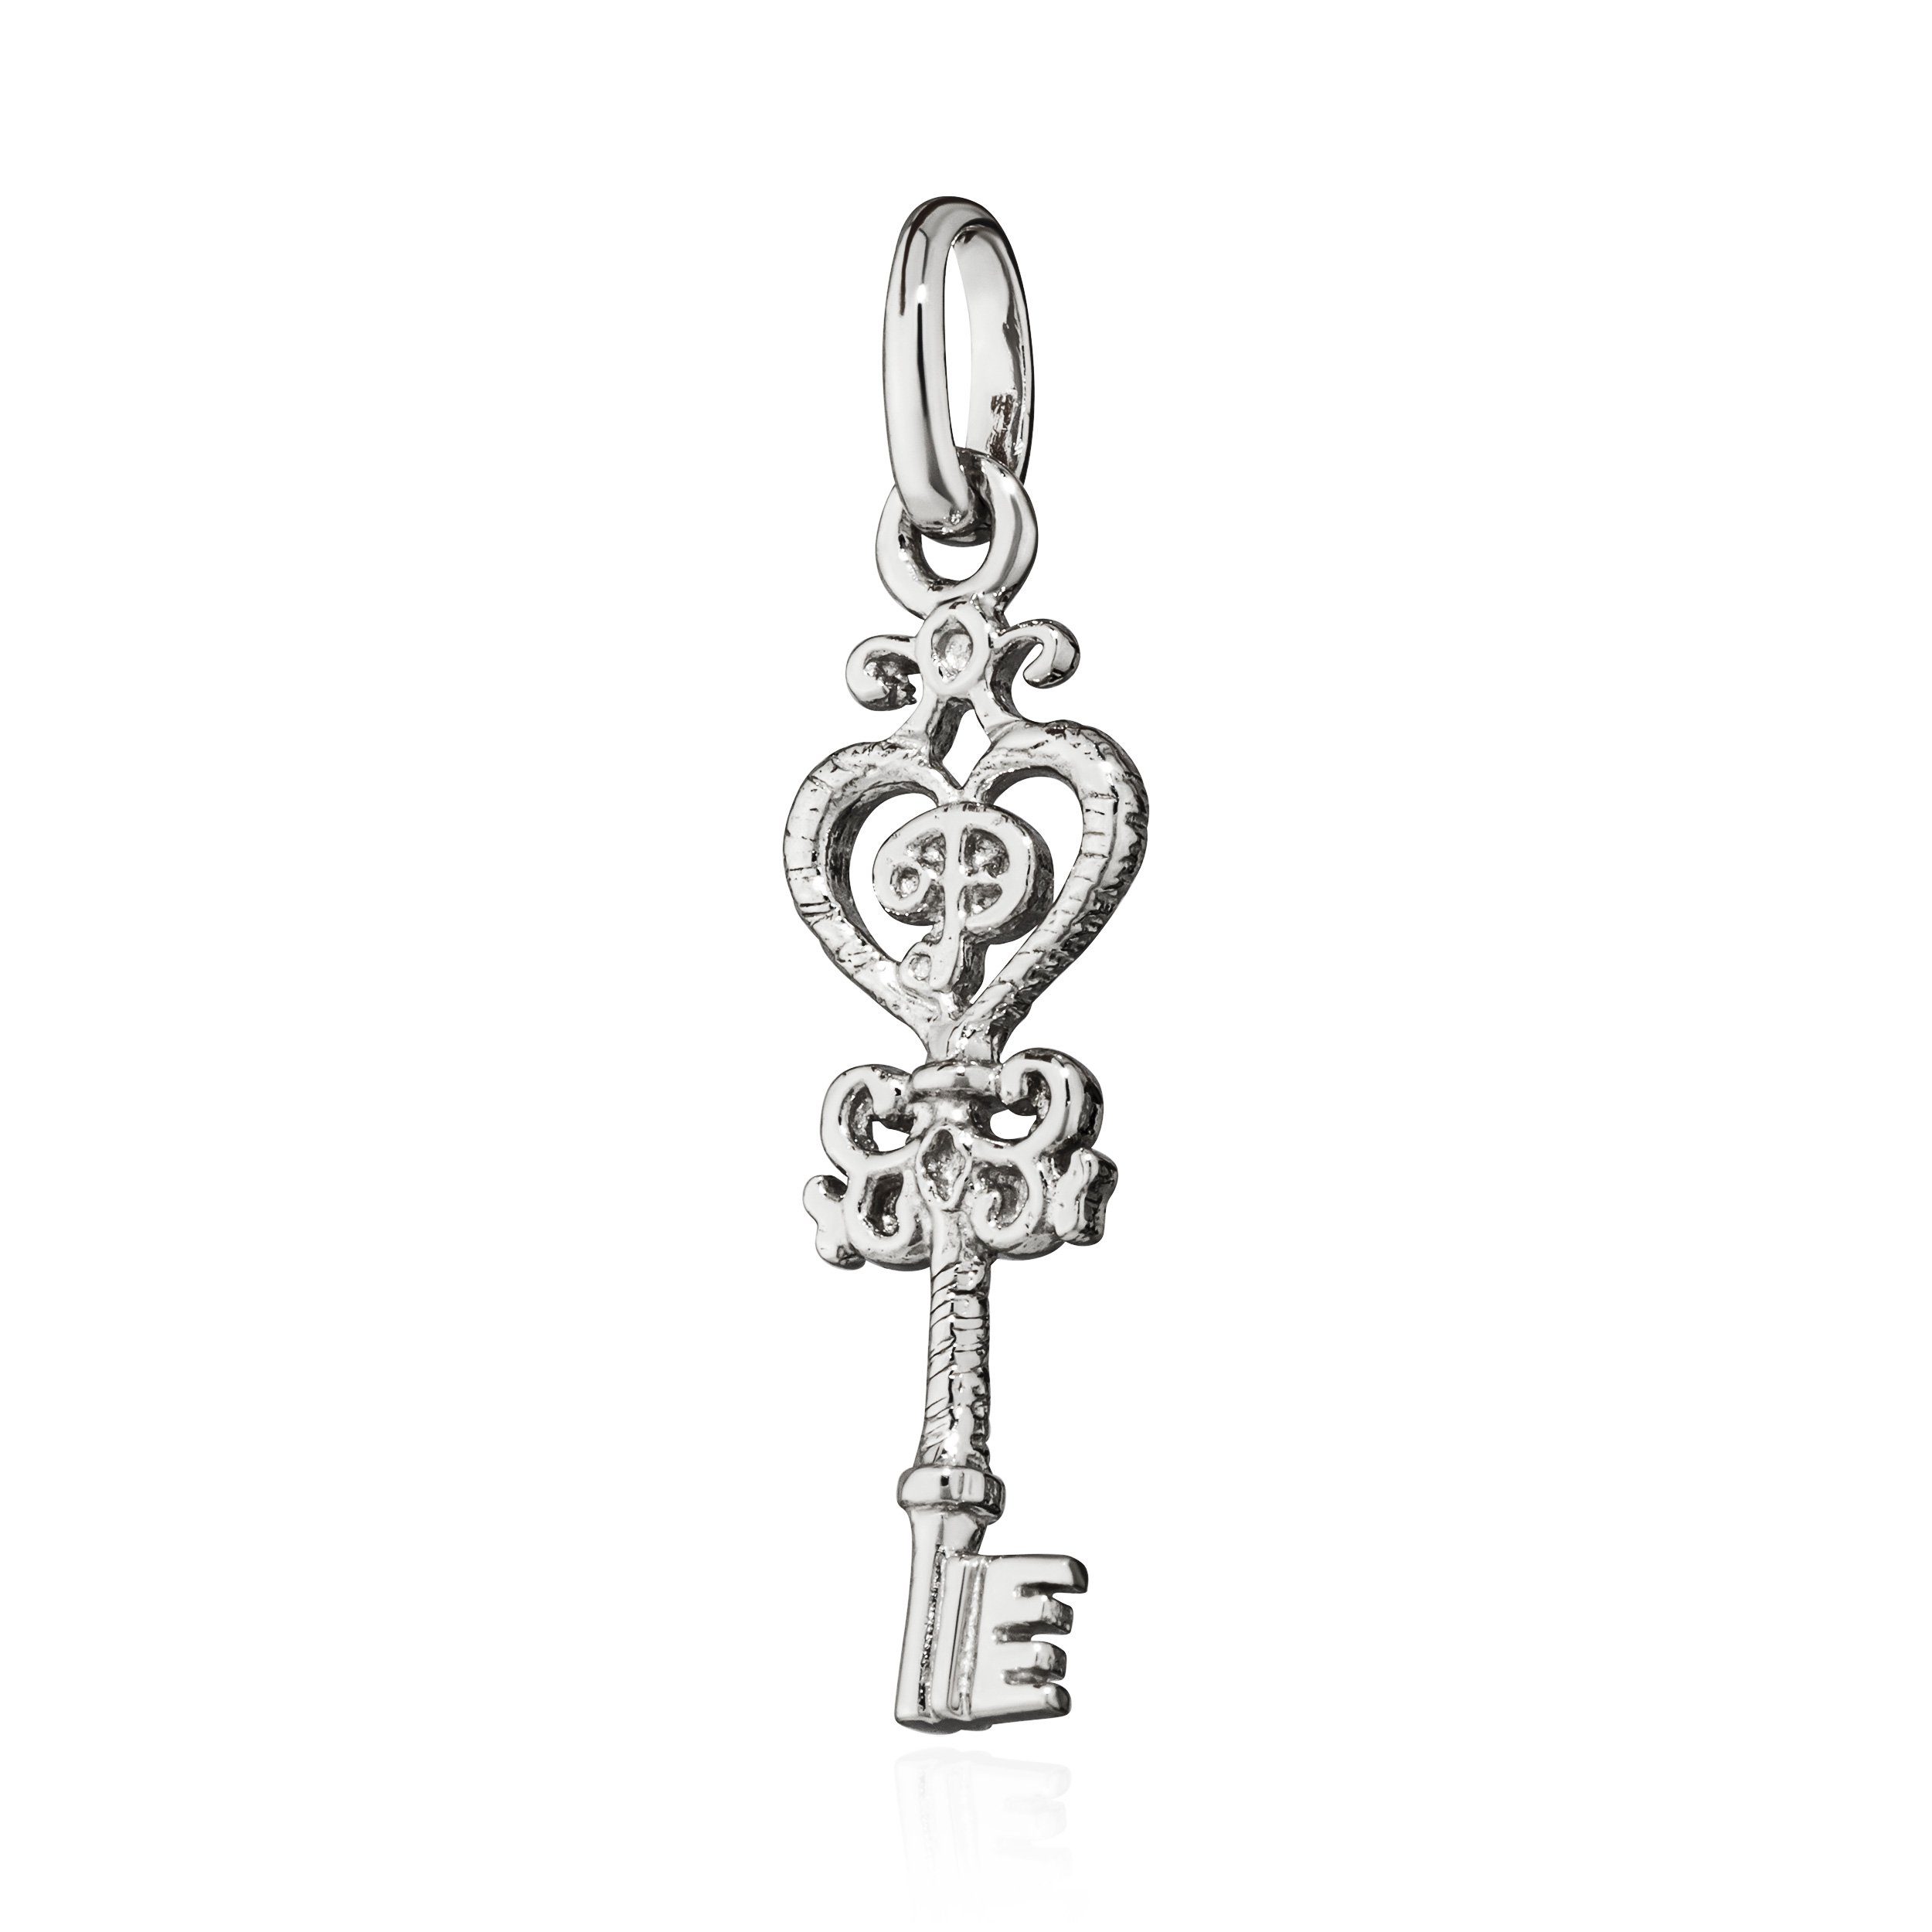 Kettenanhänger NKlaus rhodiniert Talisman Schlüssel 22x7mm 925 Kettenanhänger Silber Amulett